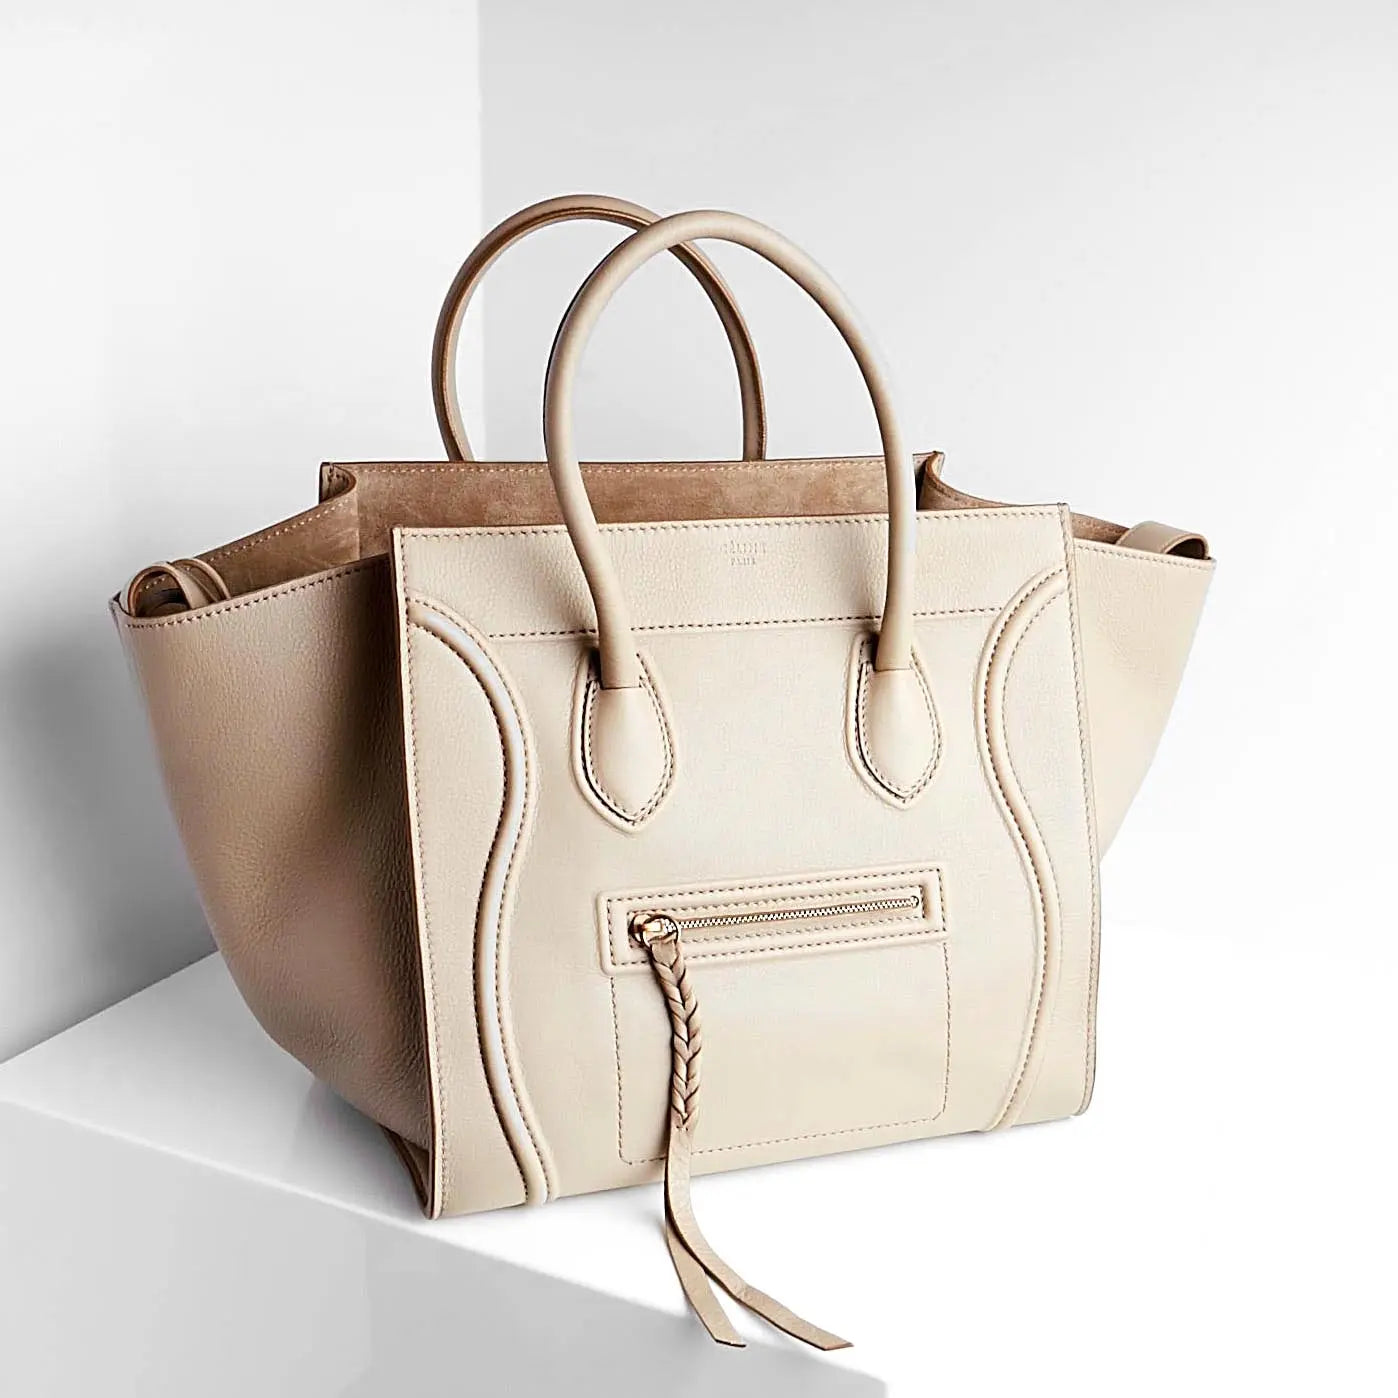 Celine Bag Buyers in the UK | Sell Your Celine Handbag